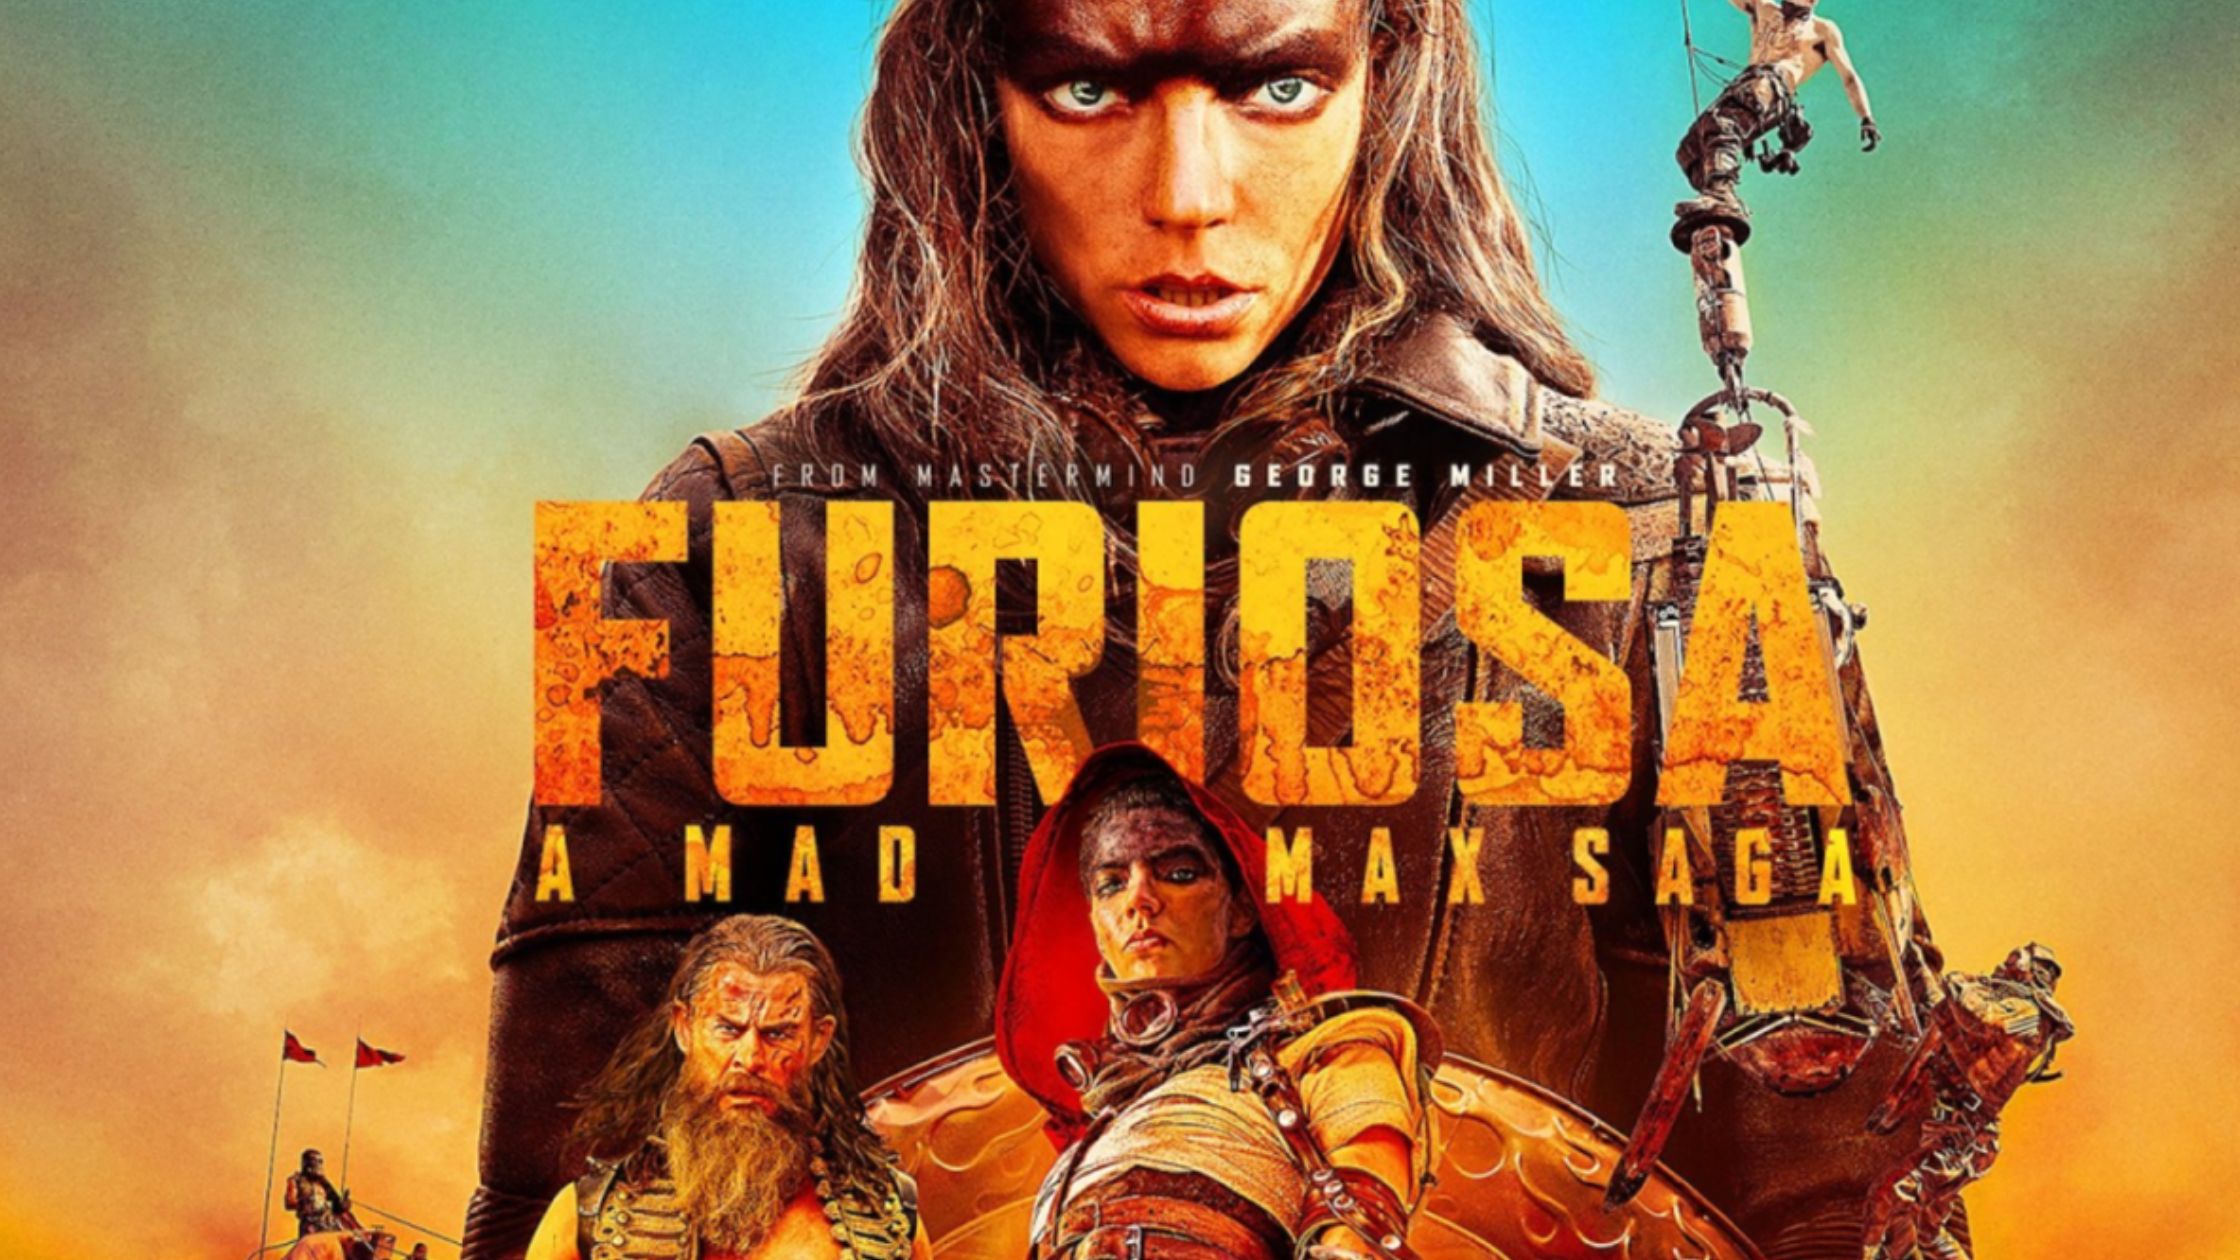 George Miller's 'Furiosa: A Mad Max Saga' Roars into Theaters